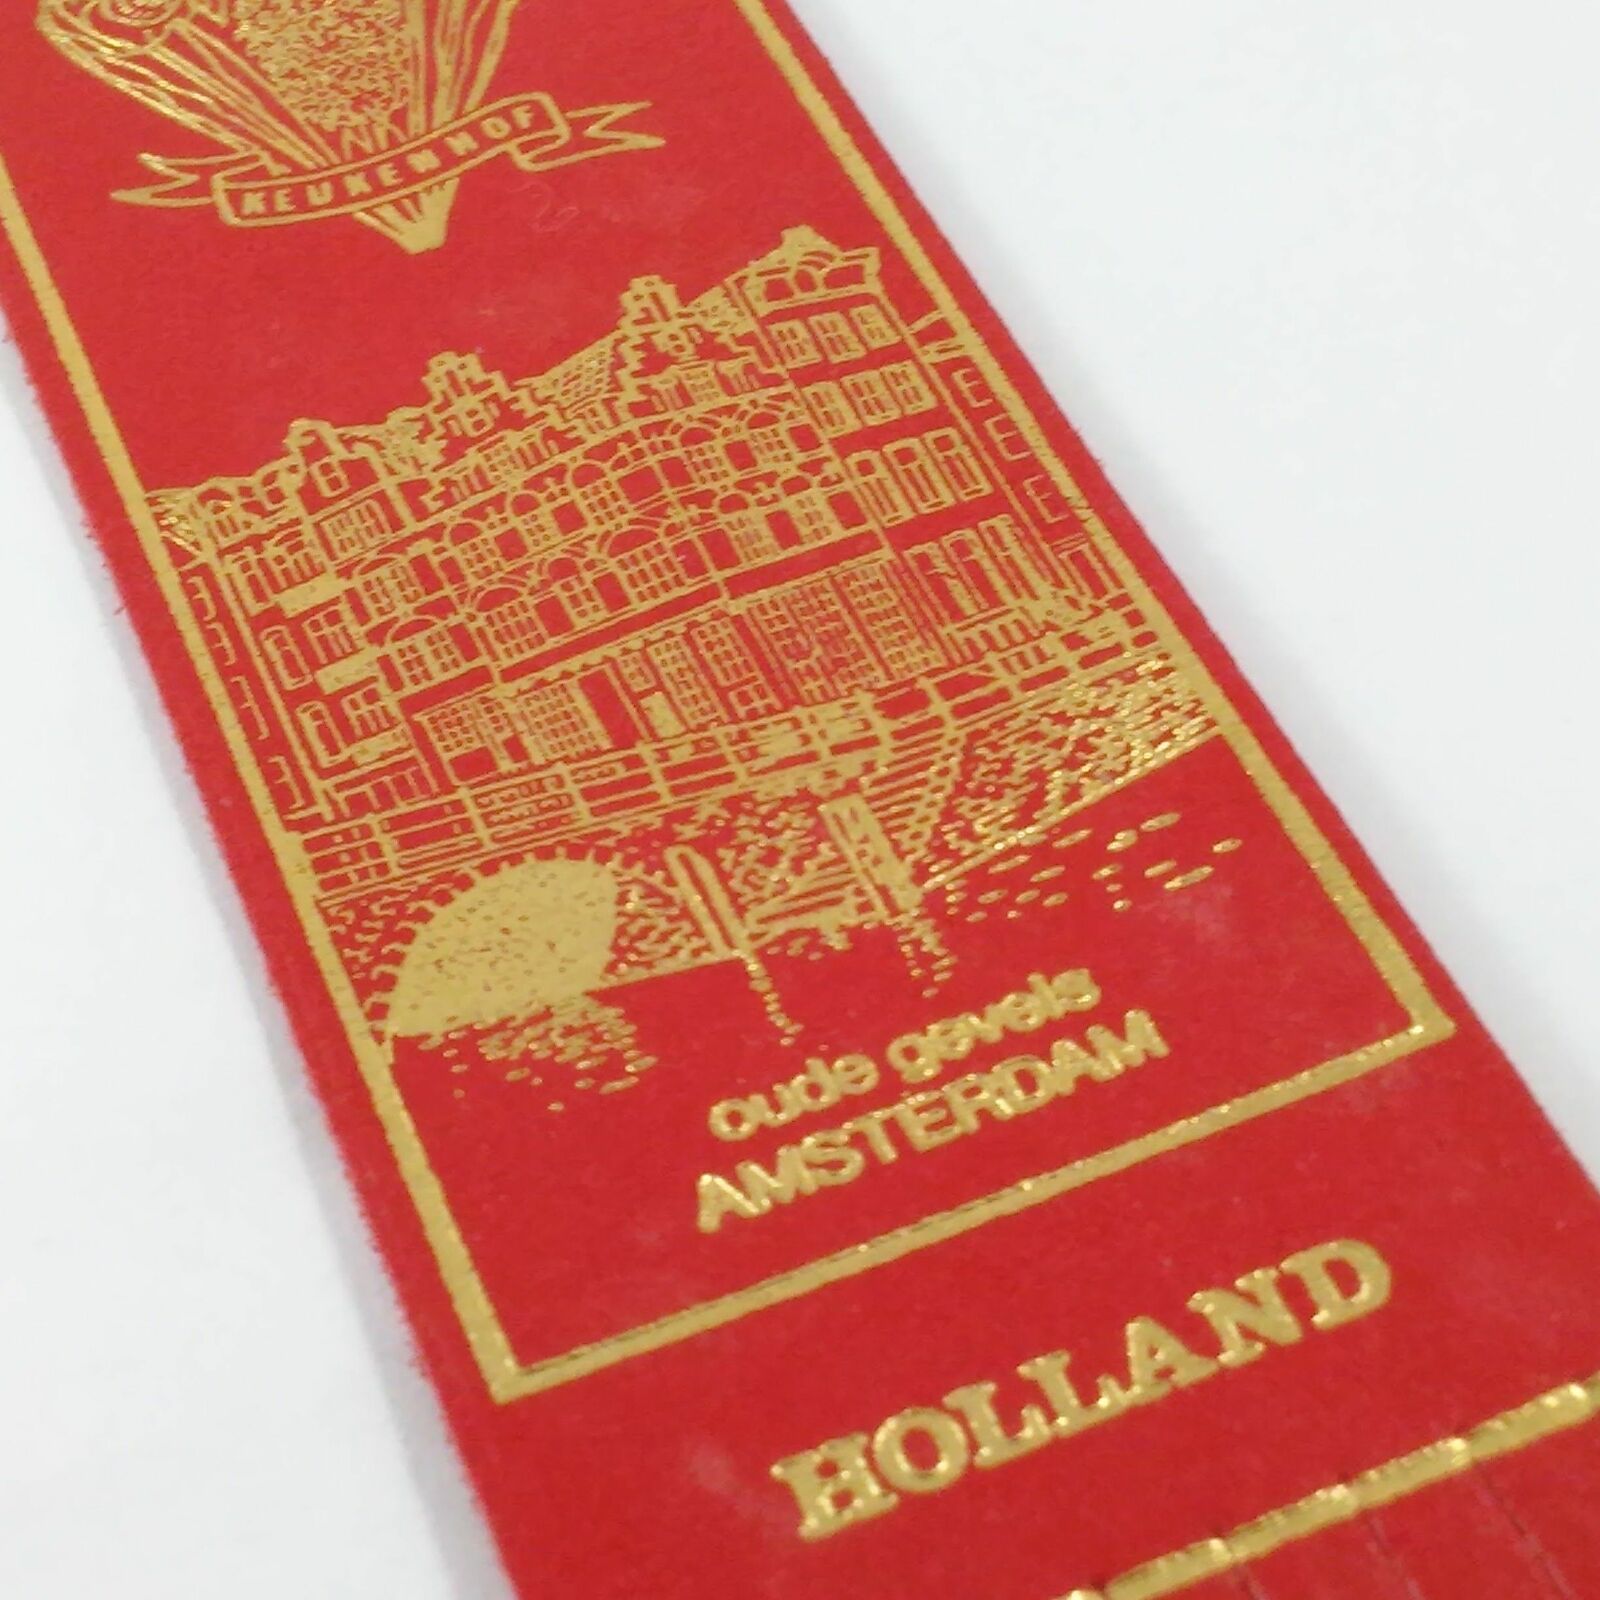 Den Haang Ridderzaal Oude Gevels Amsterdam Holland Red Golden Leather Bookmark